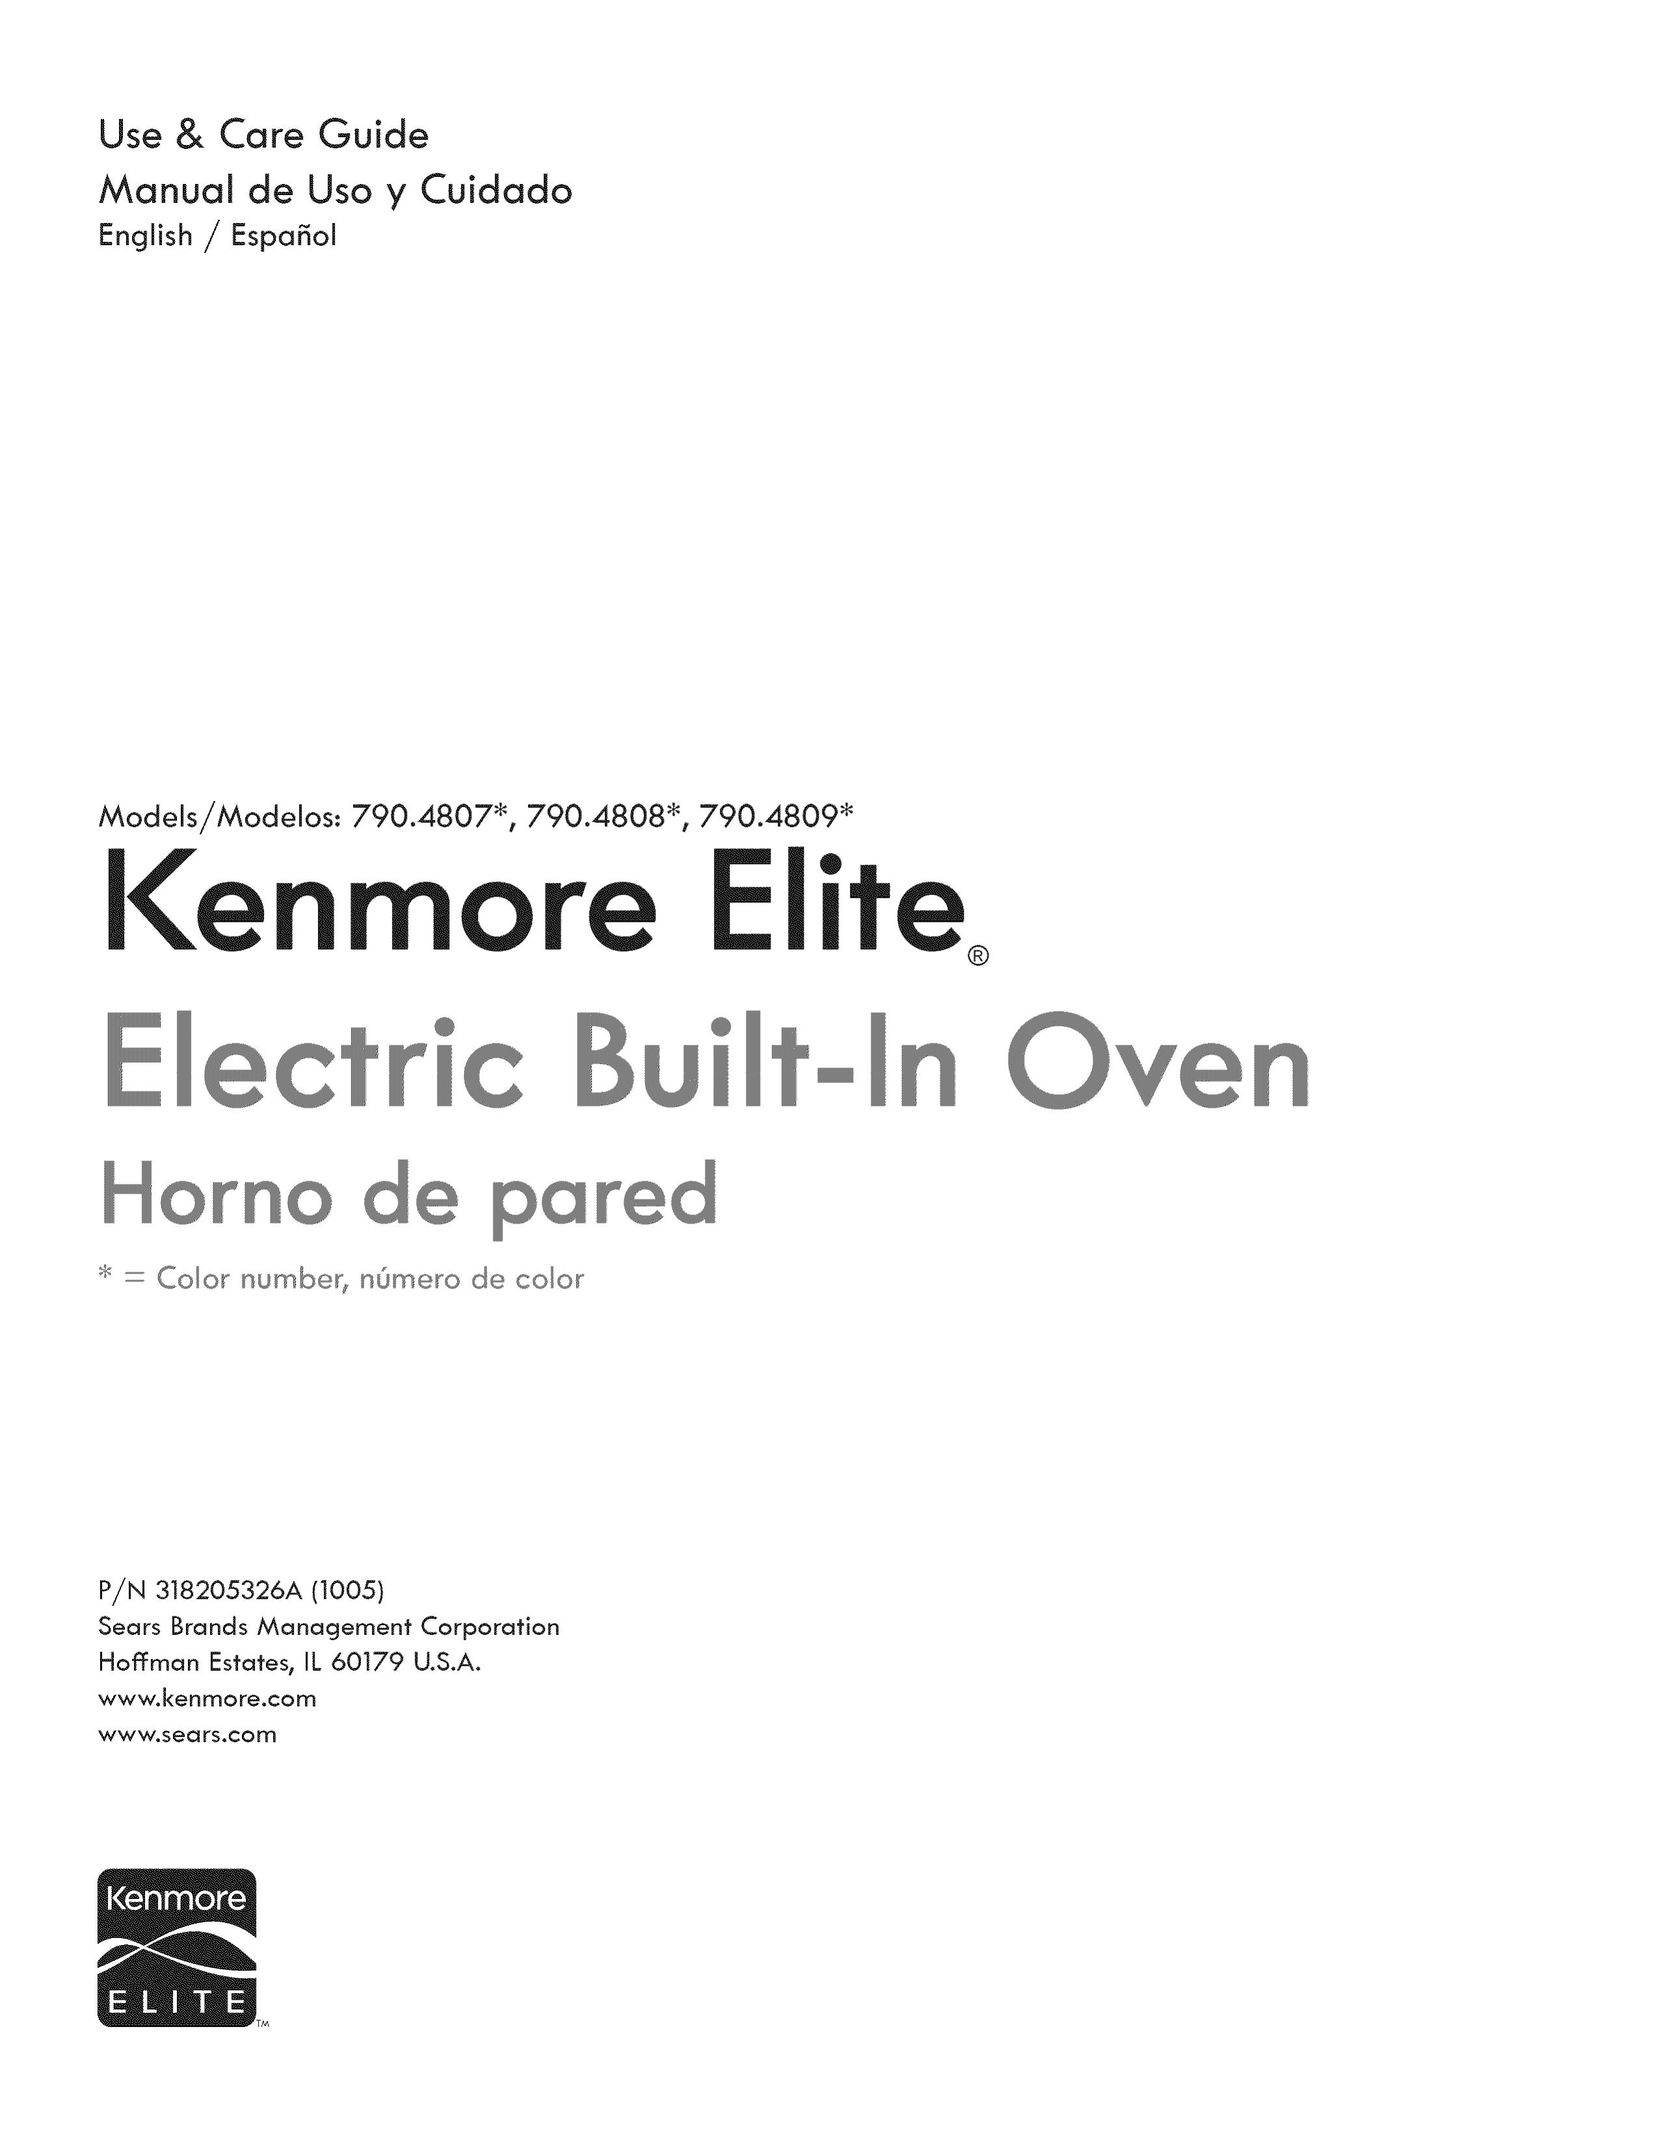 Kenmore 790.4807 Oven User Manual